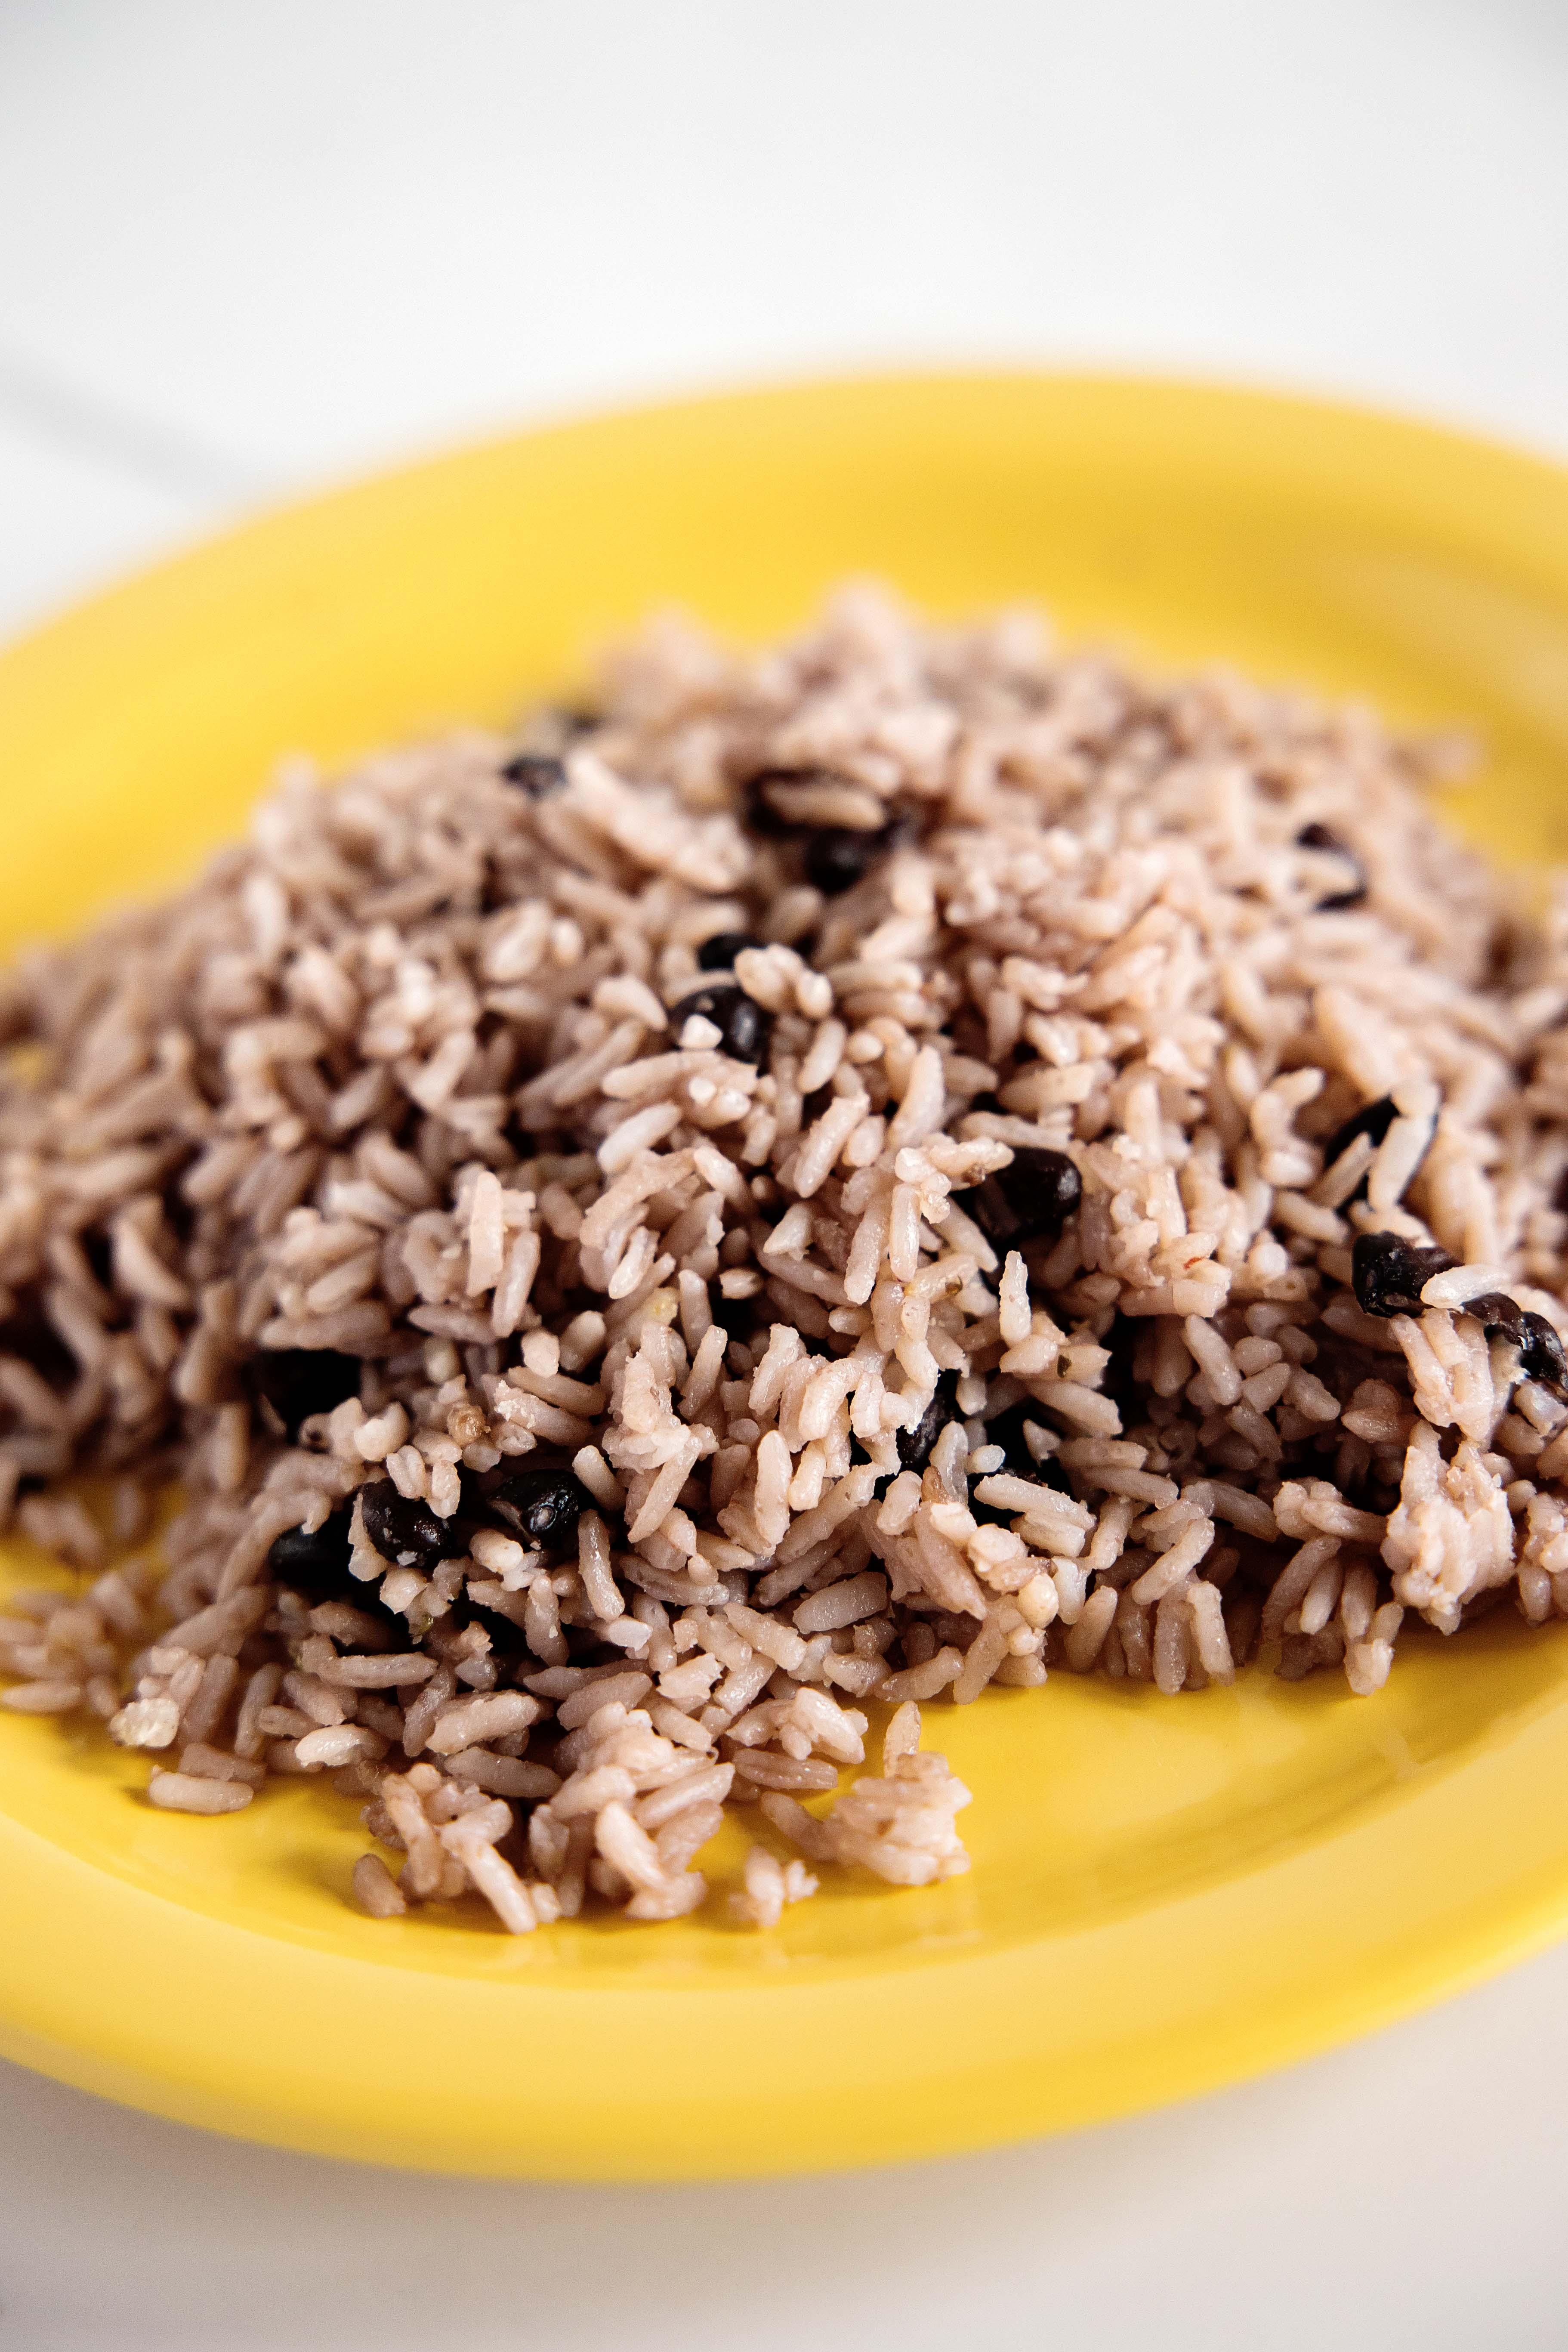 Congri/Moro (white rice and black beans mixed)